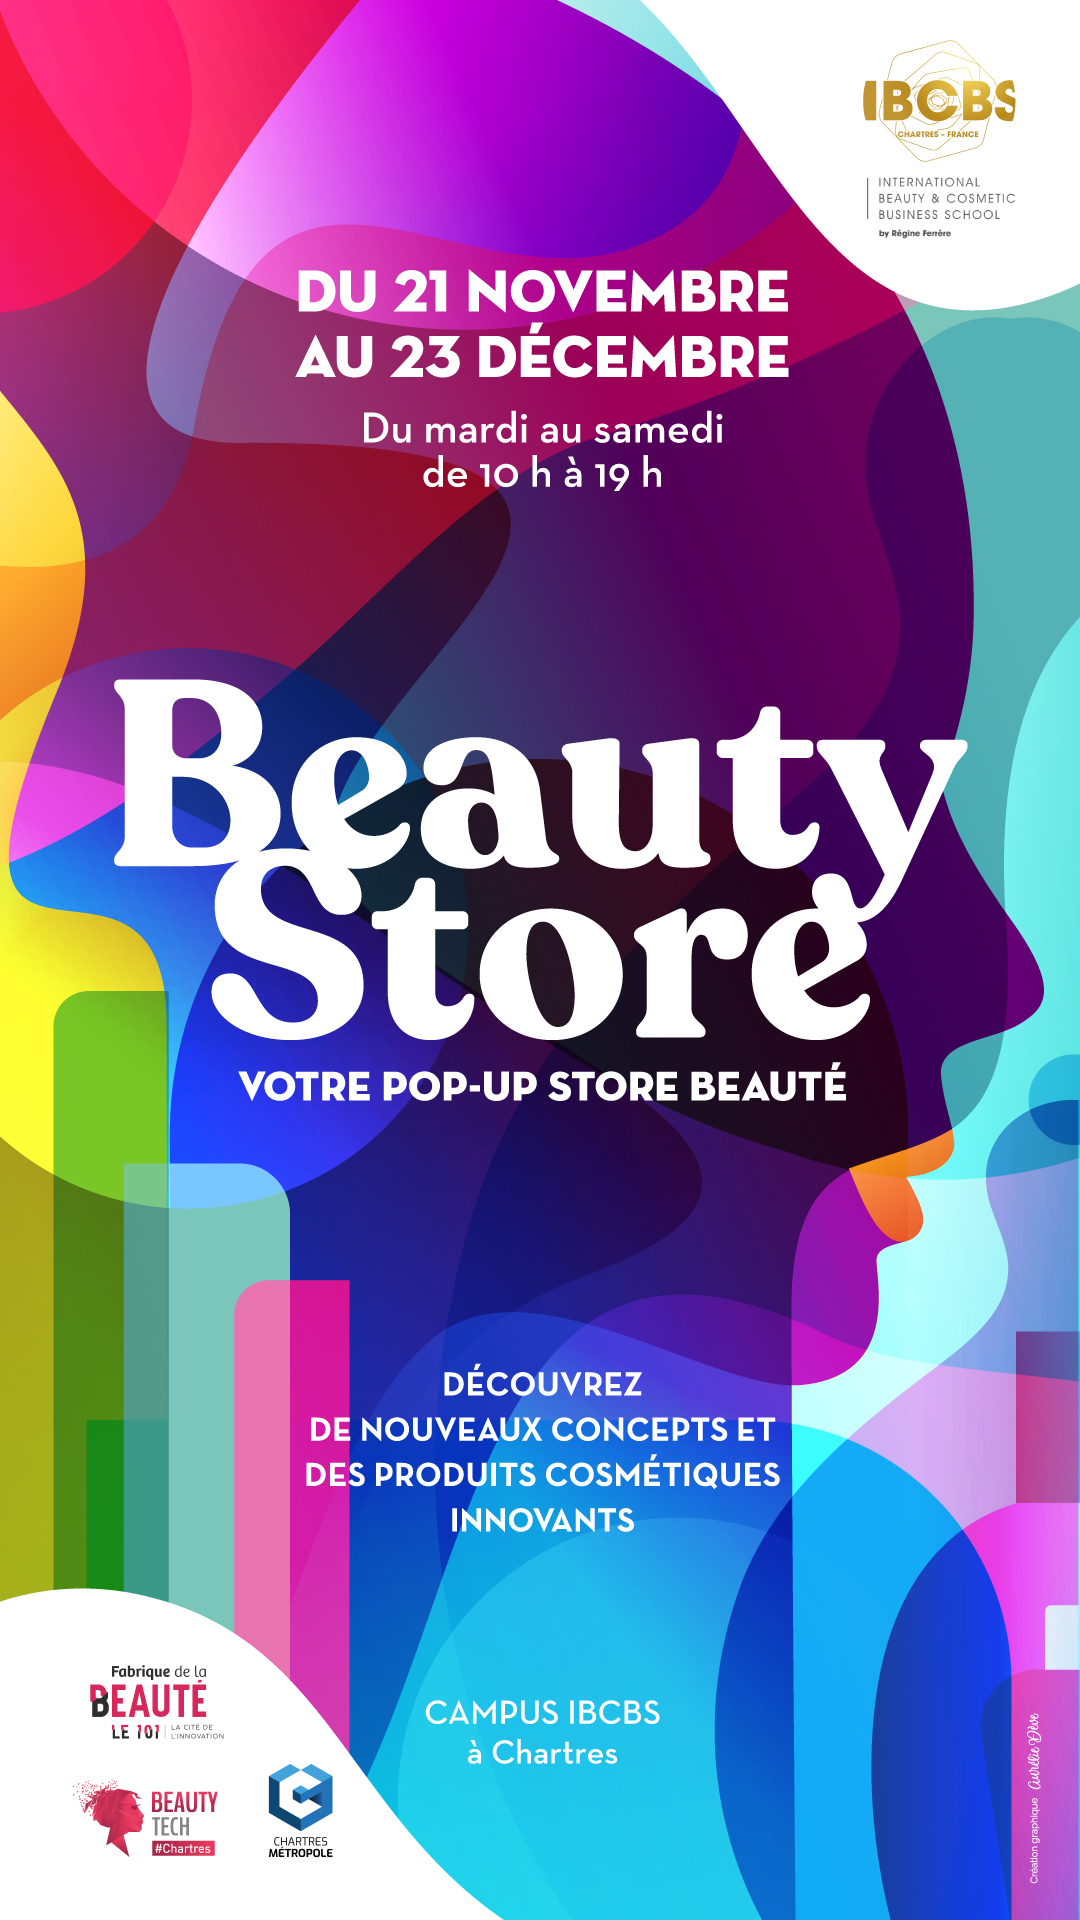 Beauty Store | IBCBS 